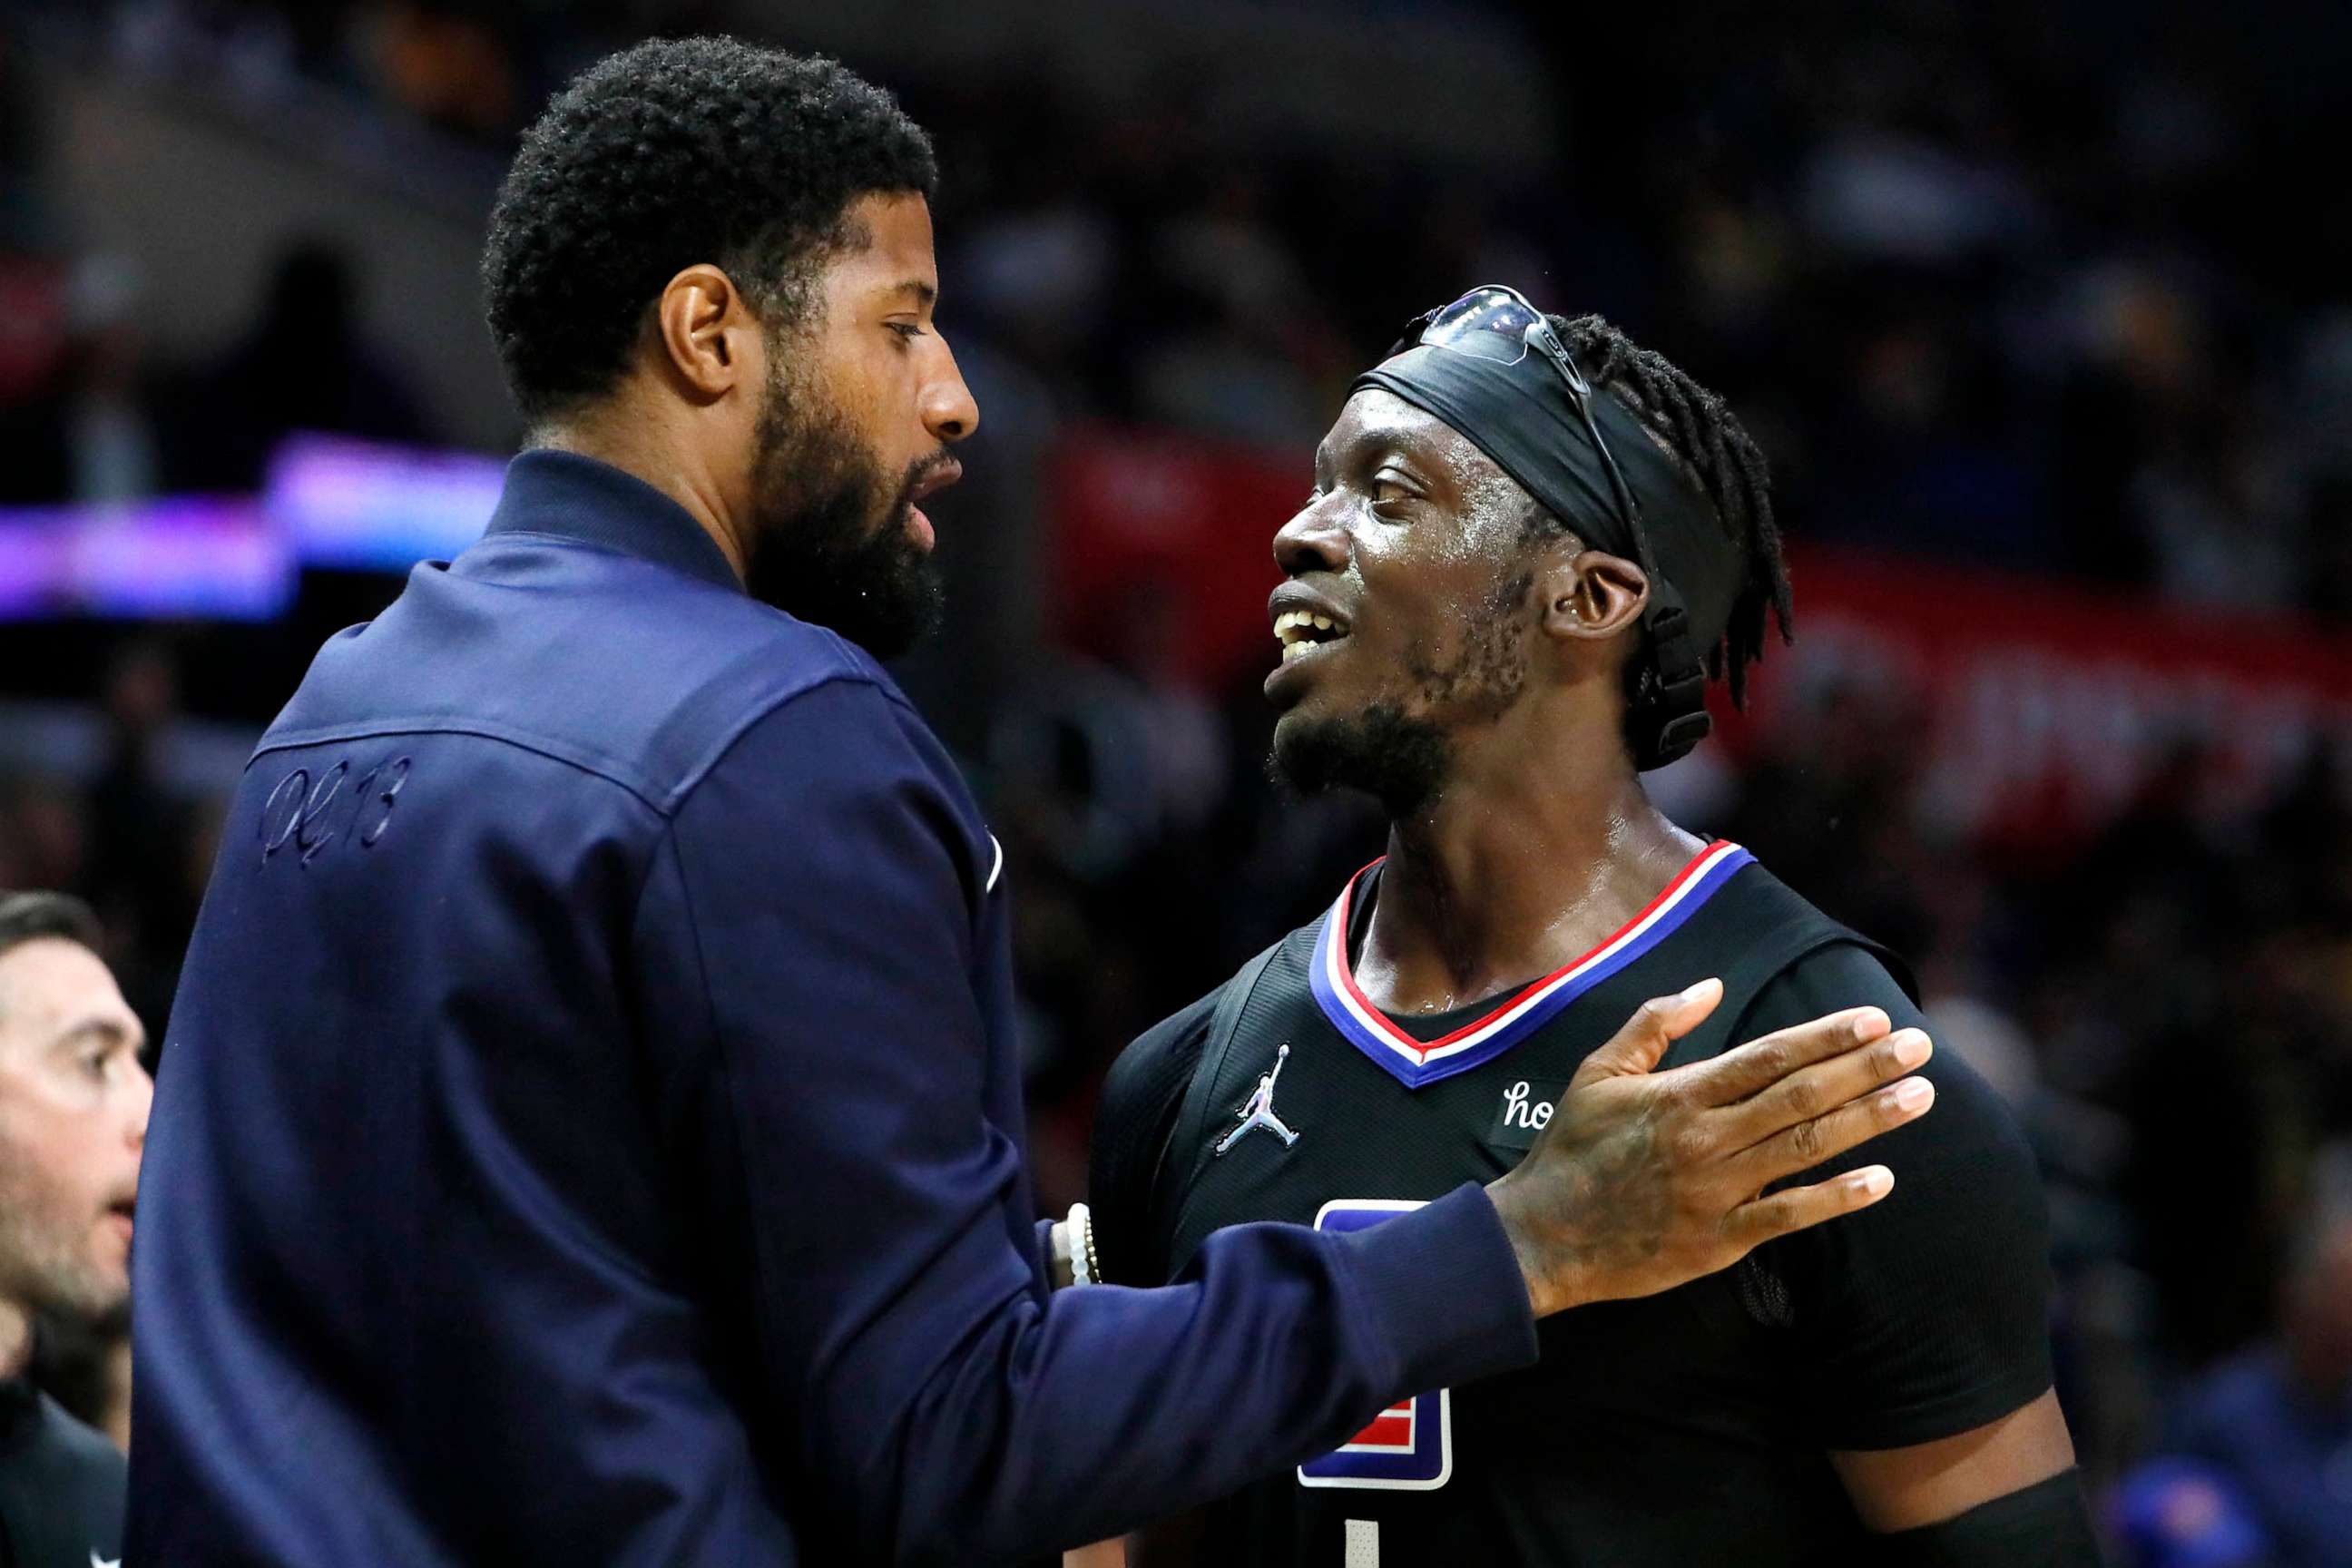 NBA stars, teammates spark mental health discussions - ABC News